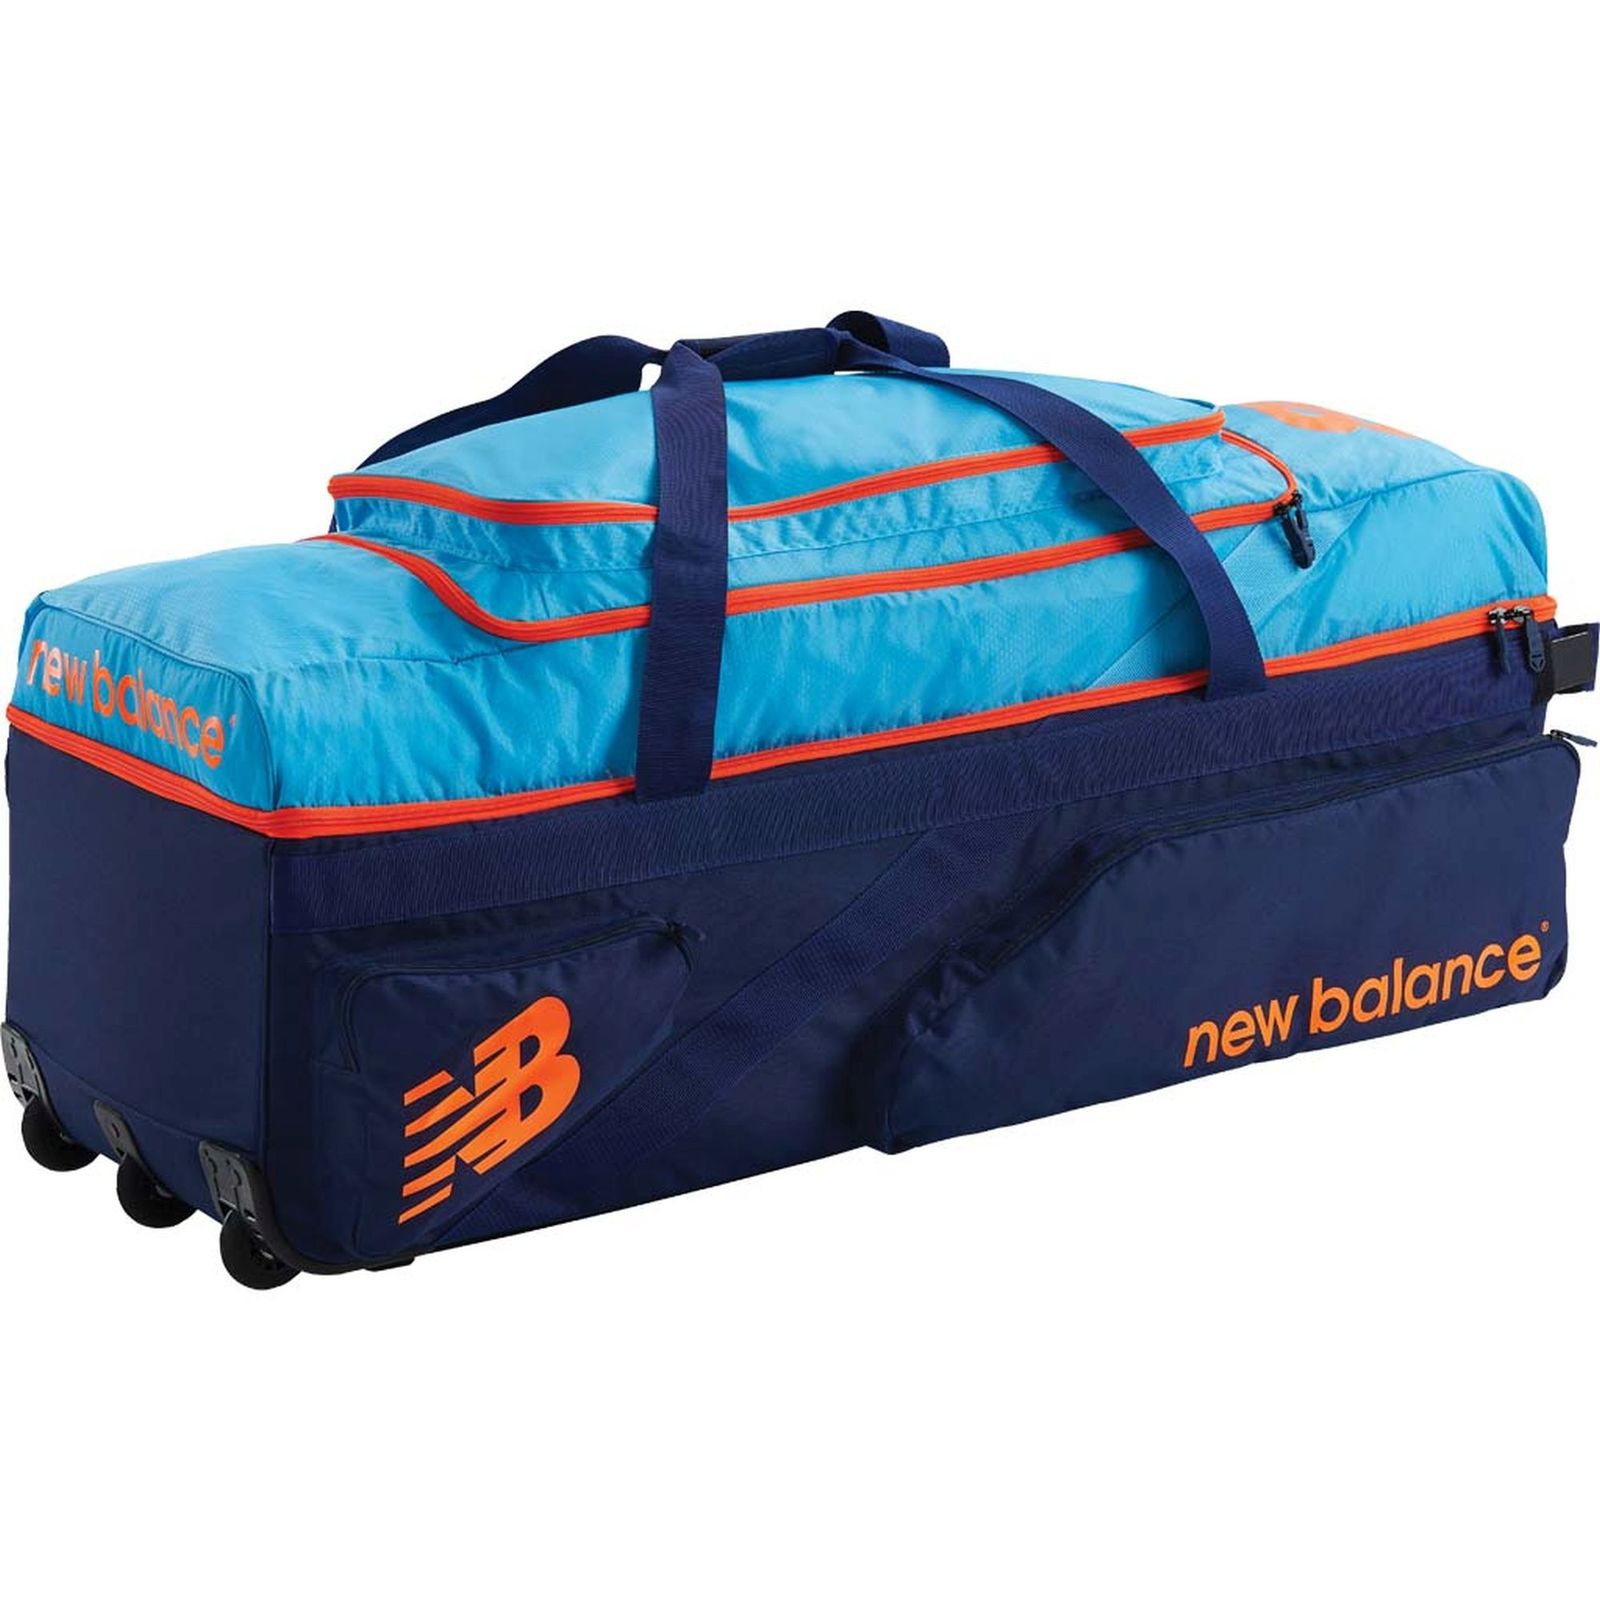 new balance 1080 kit bag